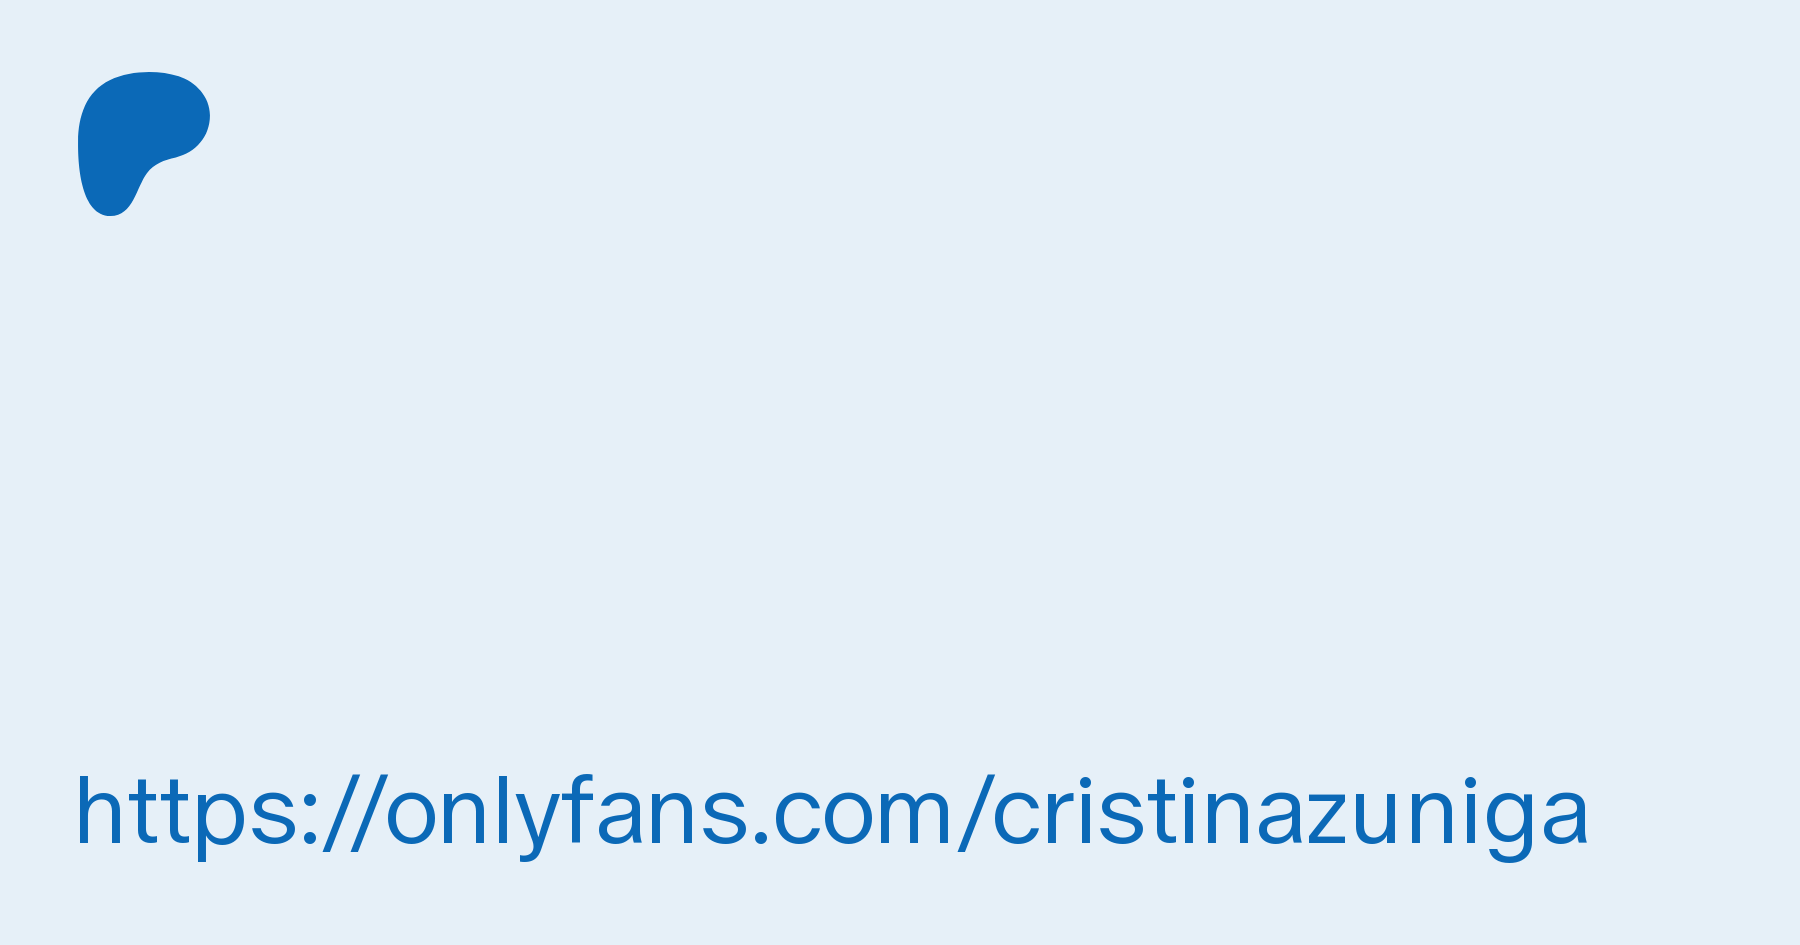 Cristina zuniga only fans